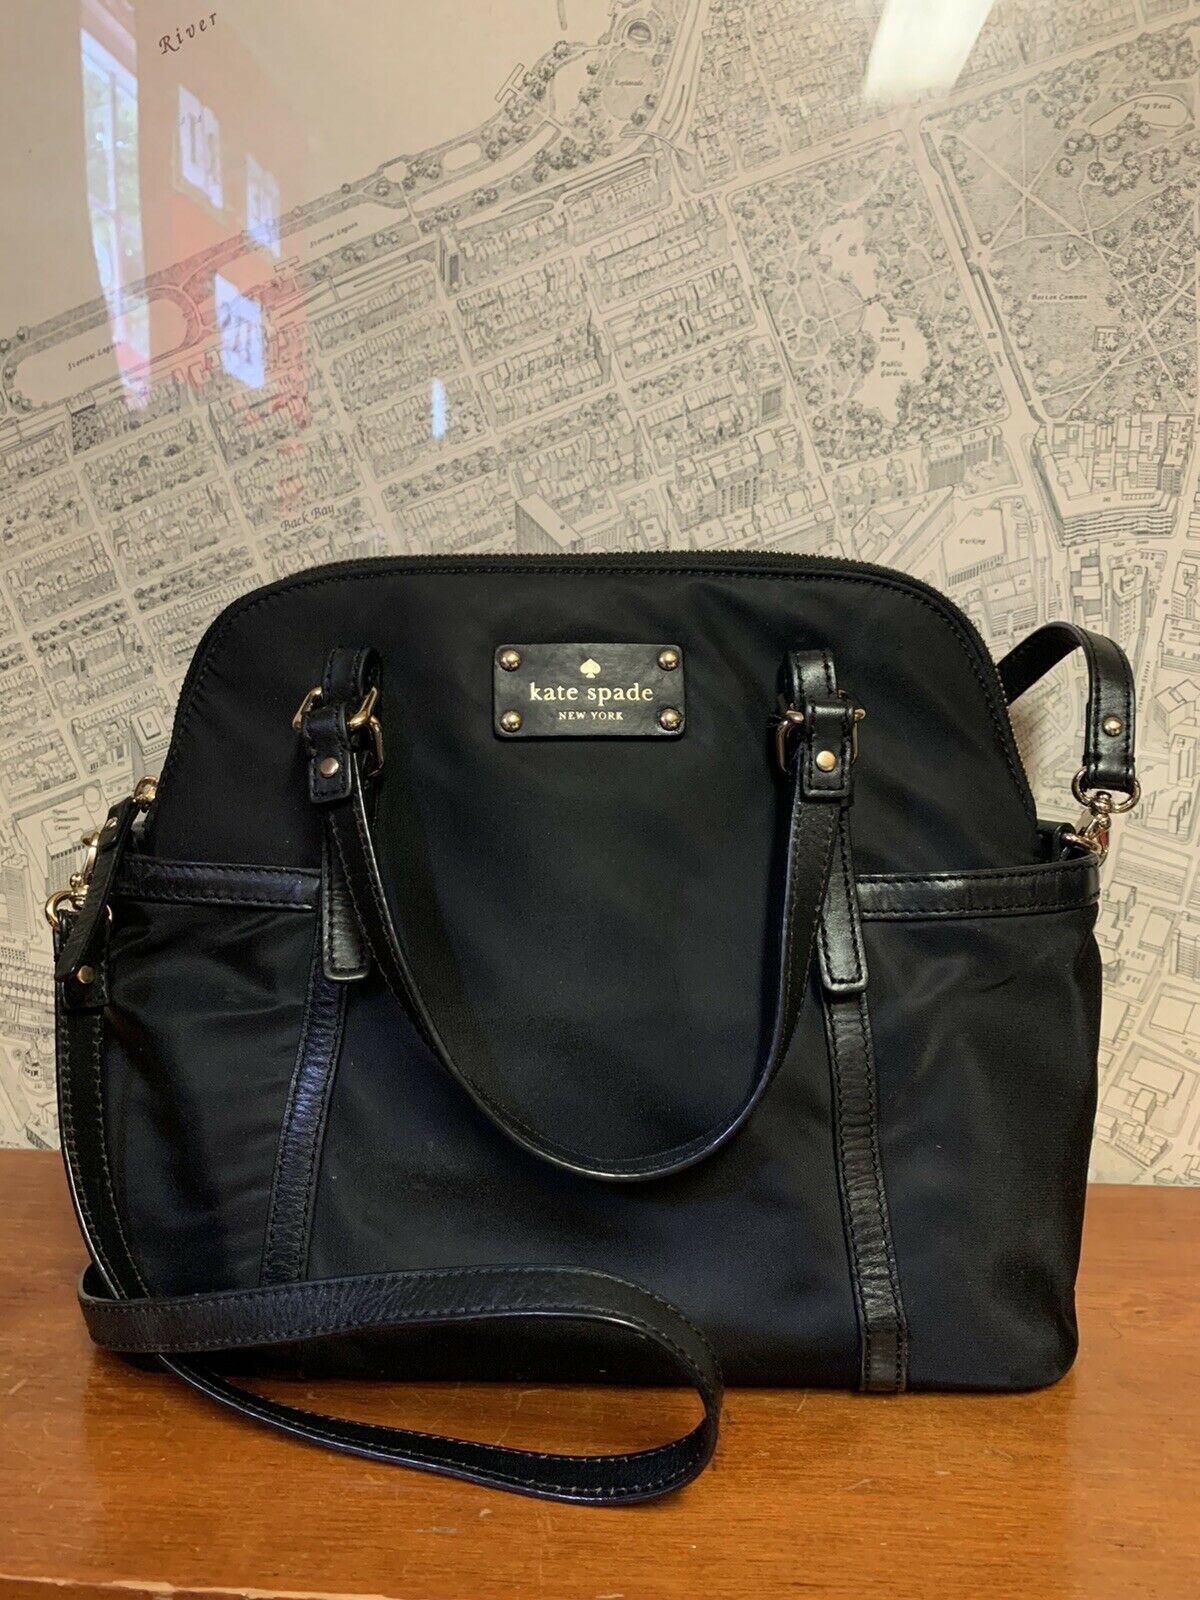 Kate Spade black nylon leather trim satchel cross body bag purse